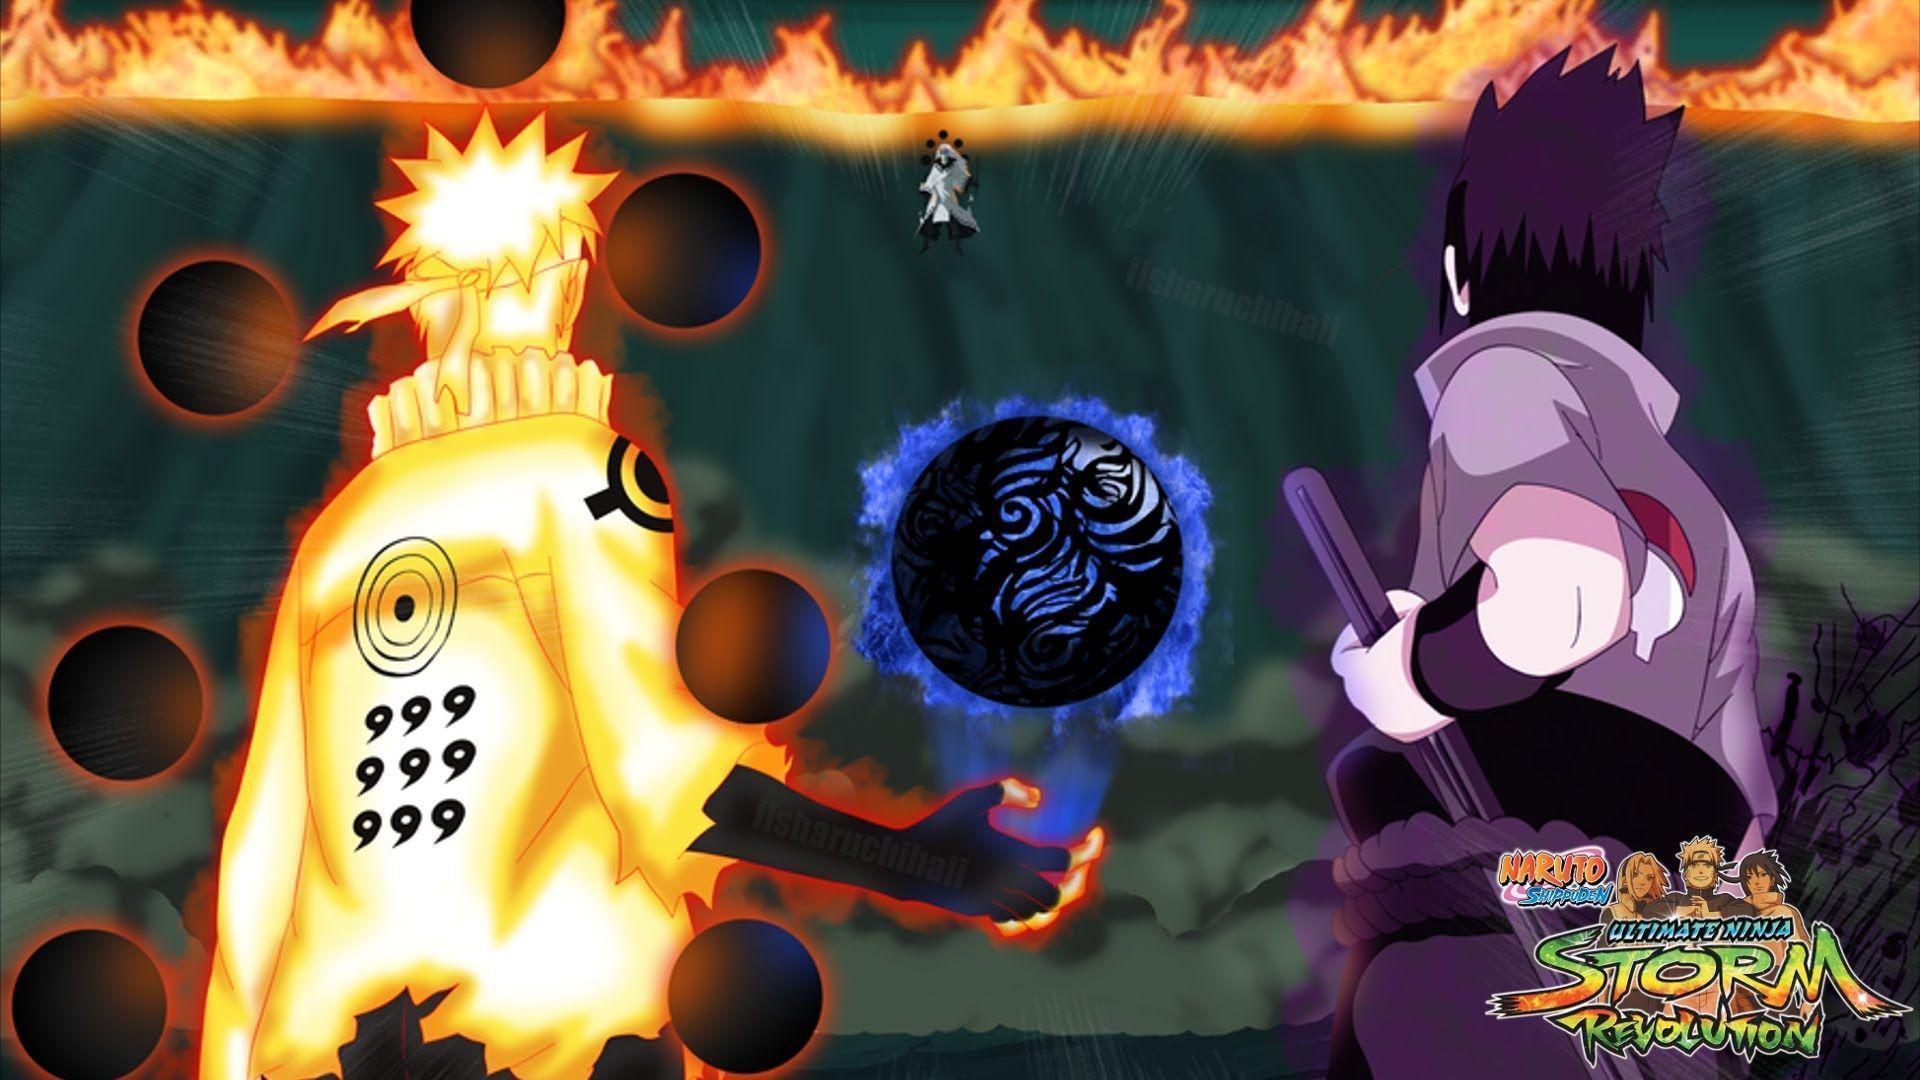 Sage of Six Paths Naruto & Rinnegan Sasuke vs Rikudo Madara Storm Revolution